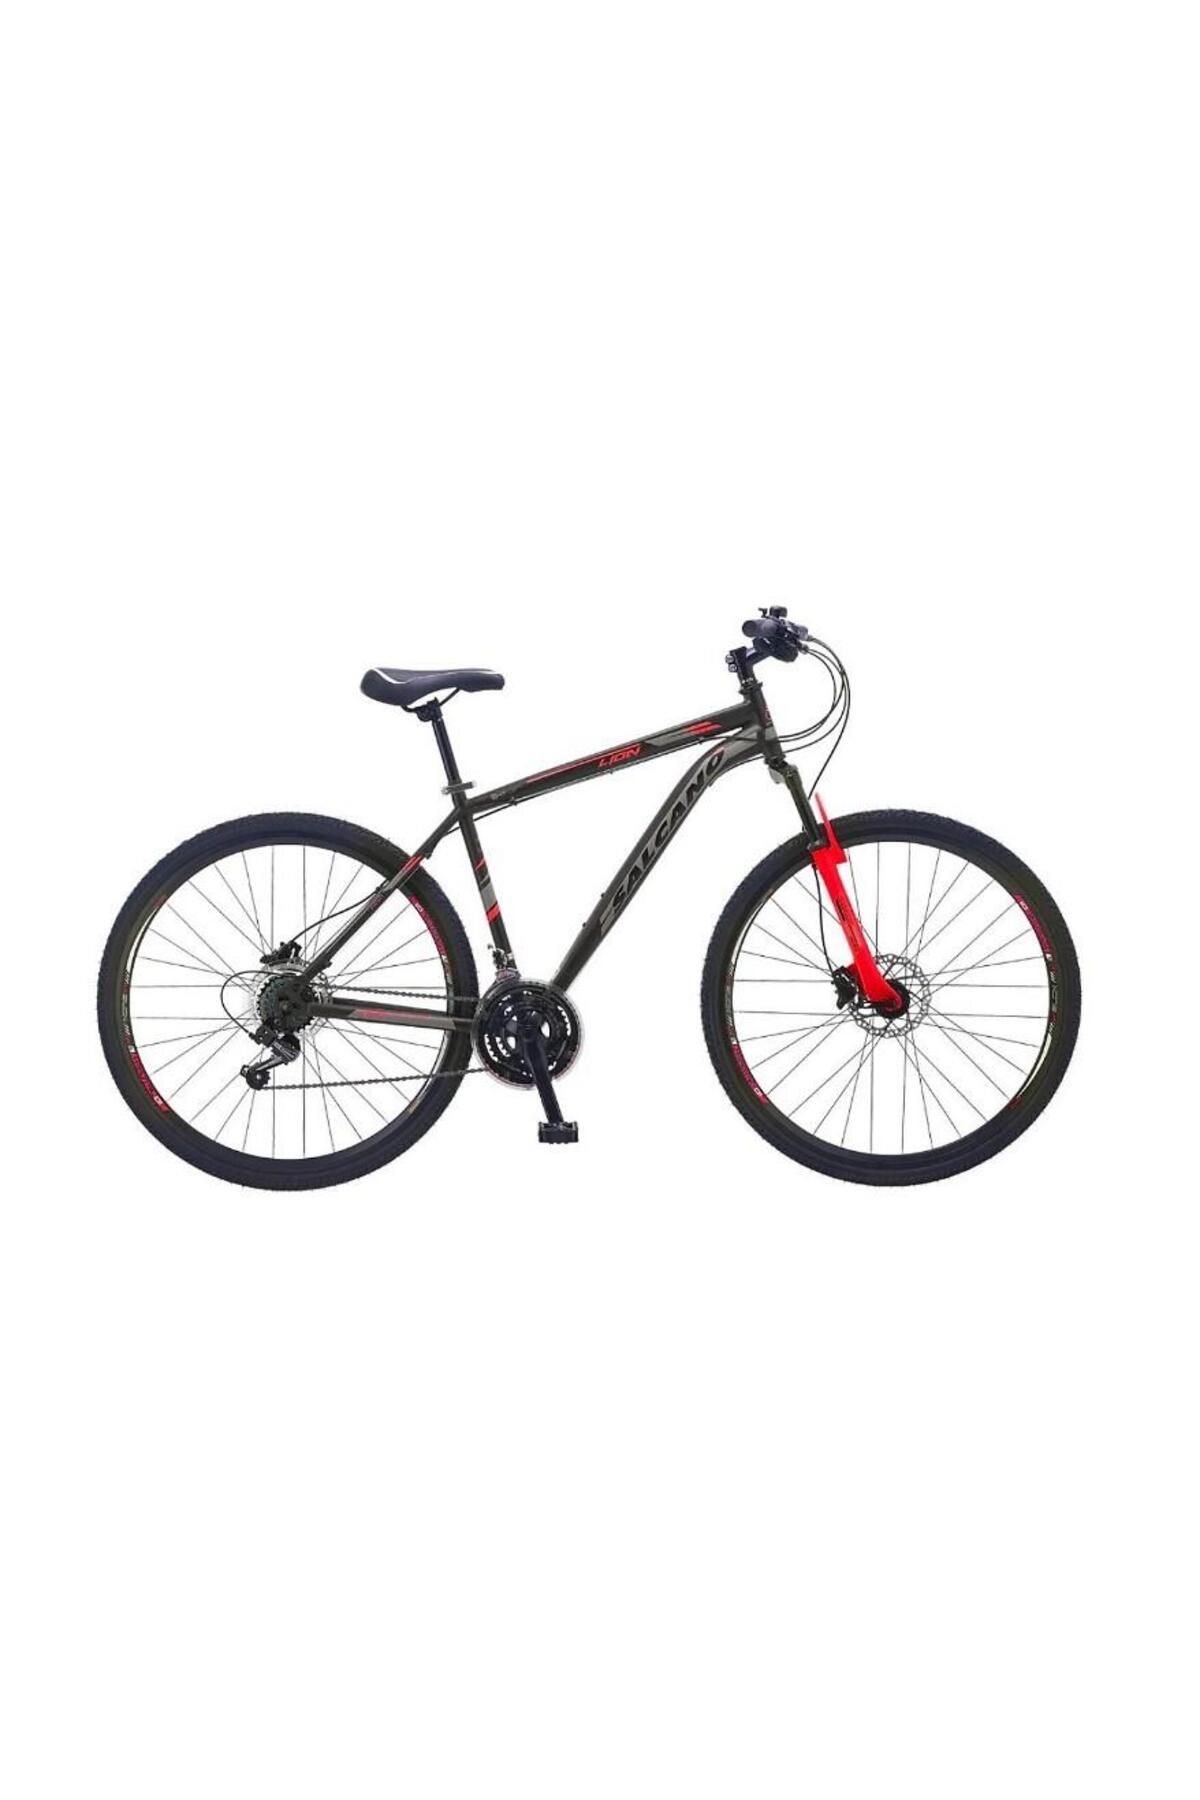 Salcano City Lion HD 28 Jant 21 Vites 19 Kadro Şehir Bisikleti Mat Siyah Kırmızı Trekking Bisikleti